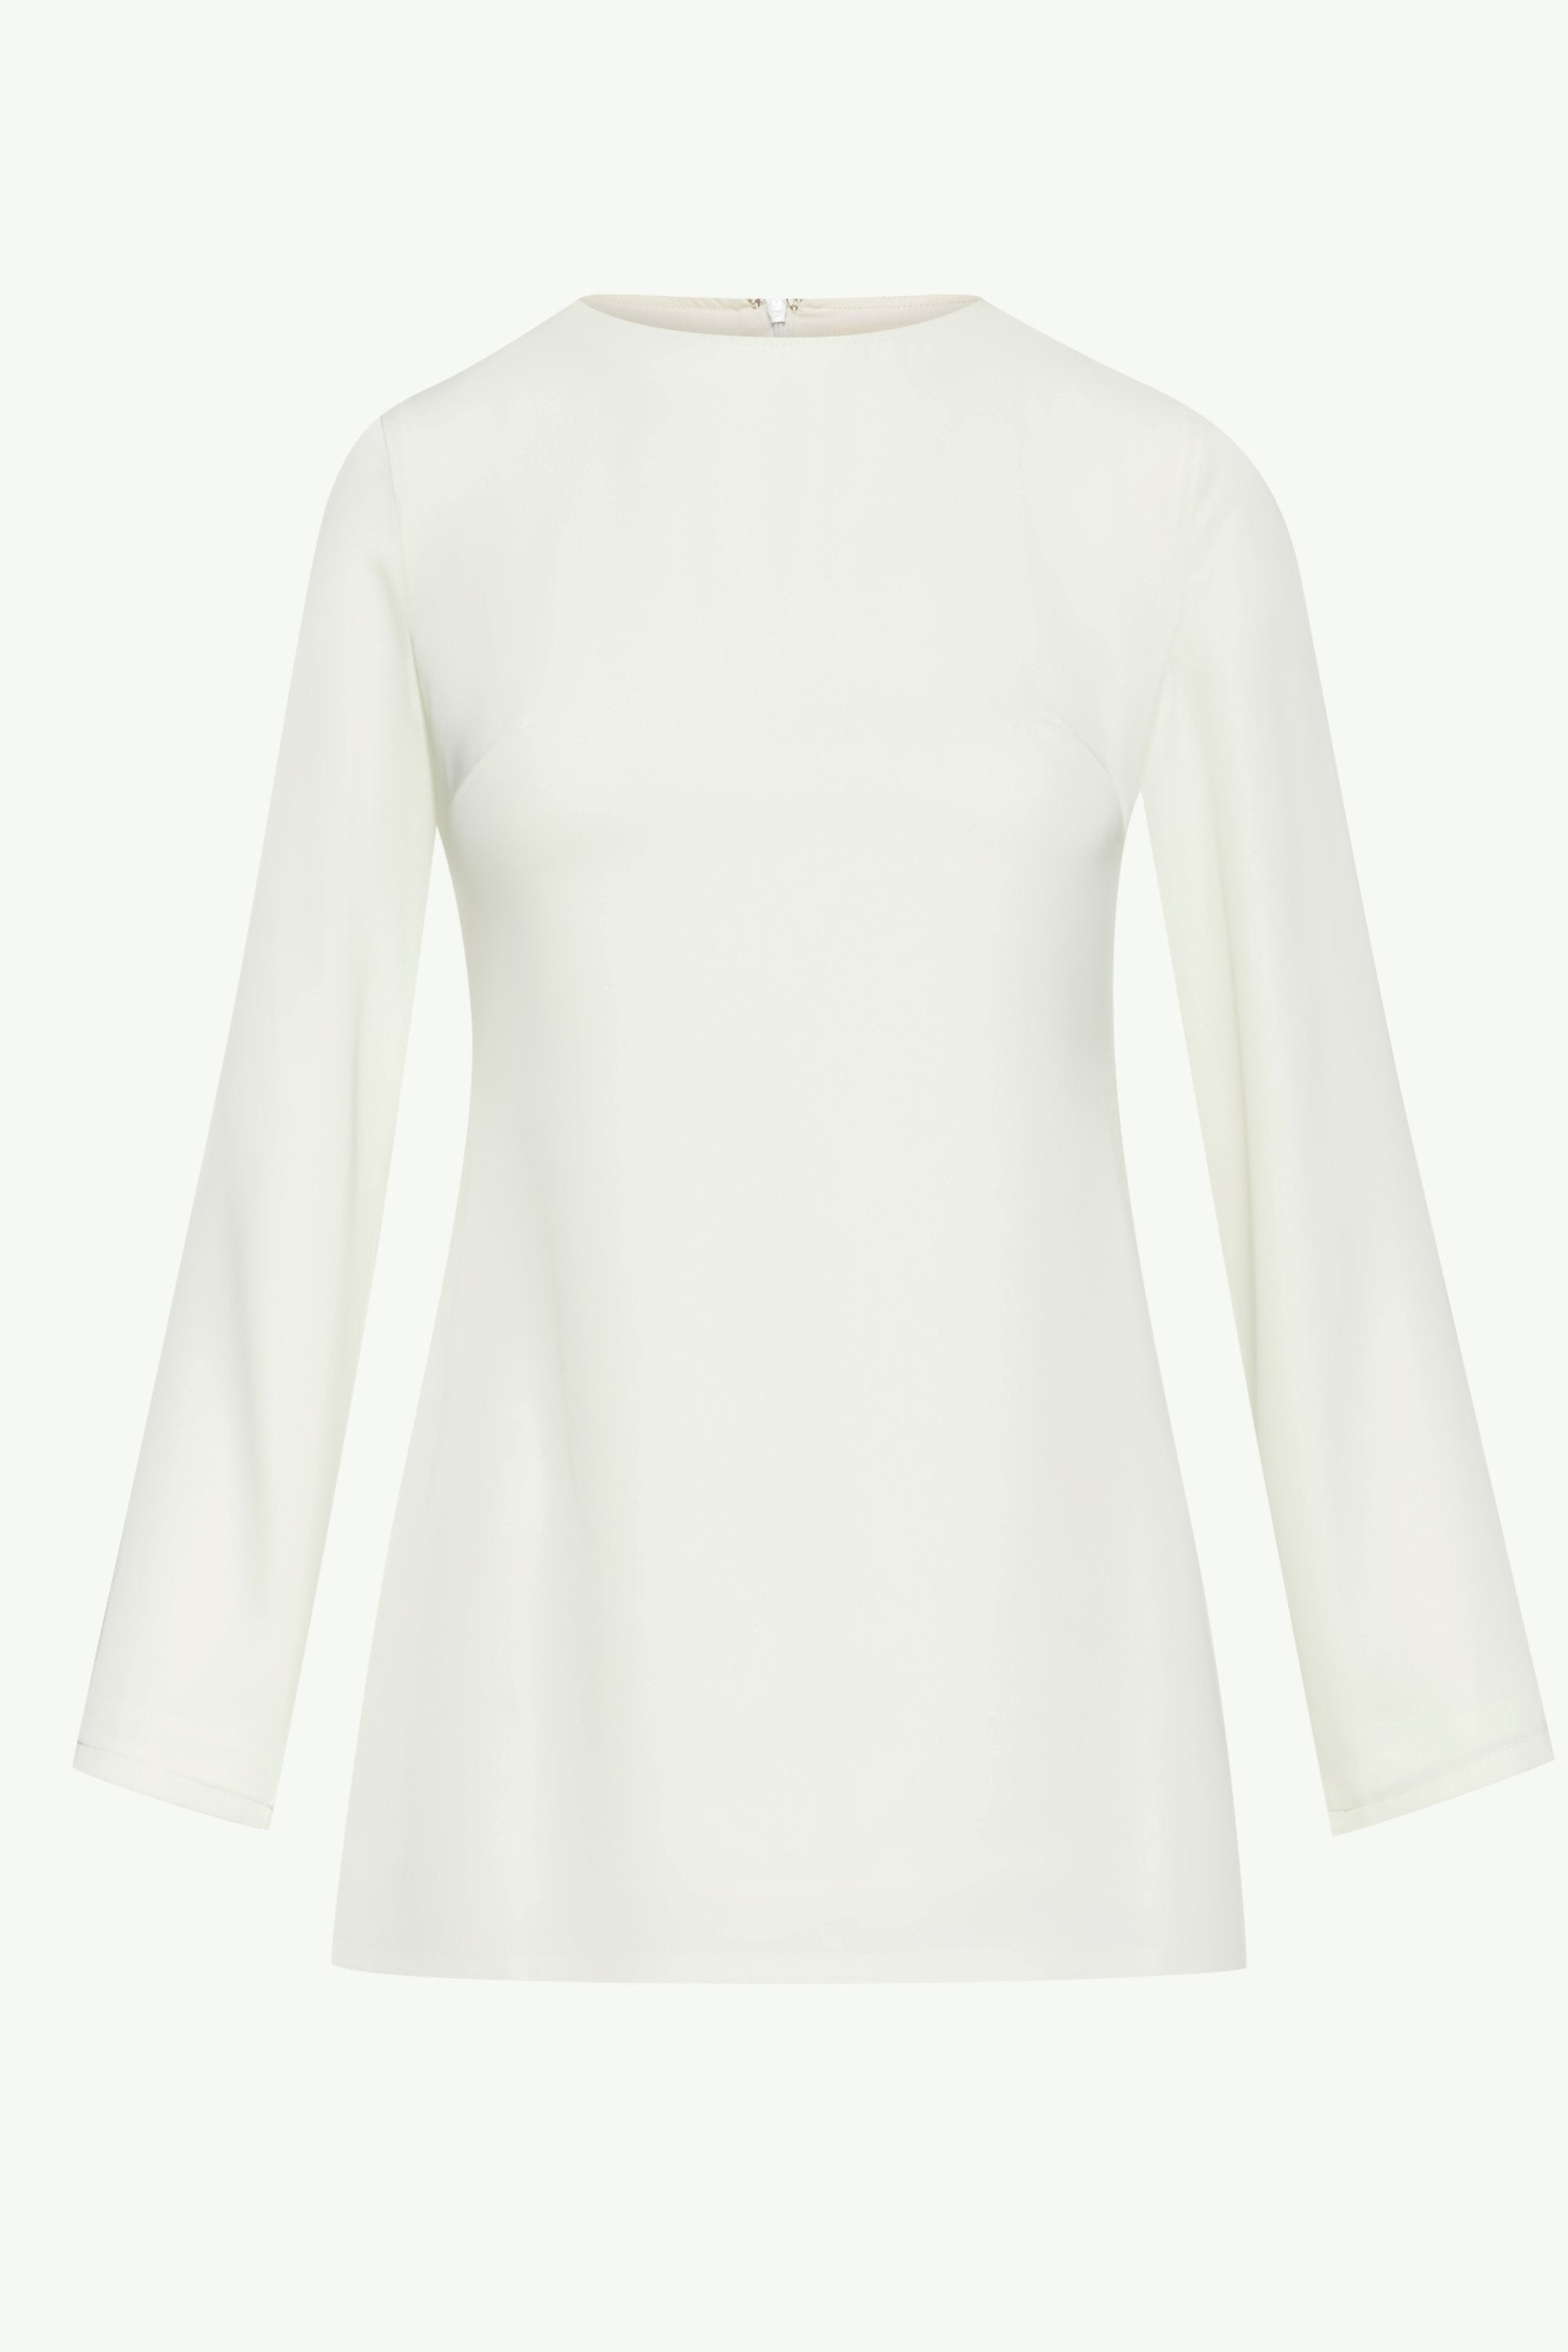 Amela Satin Top - Off White Clothing epschoolboard 